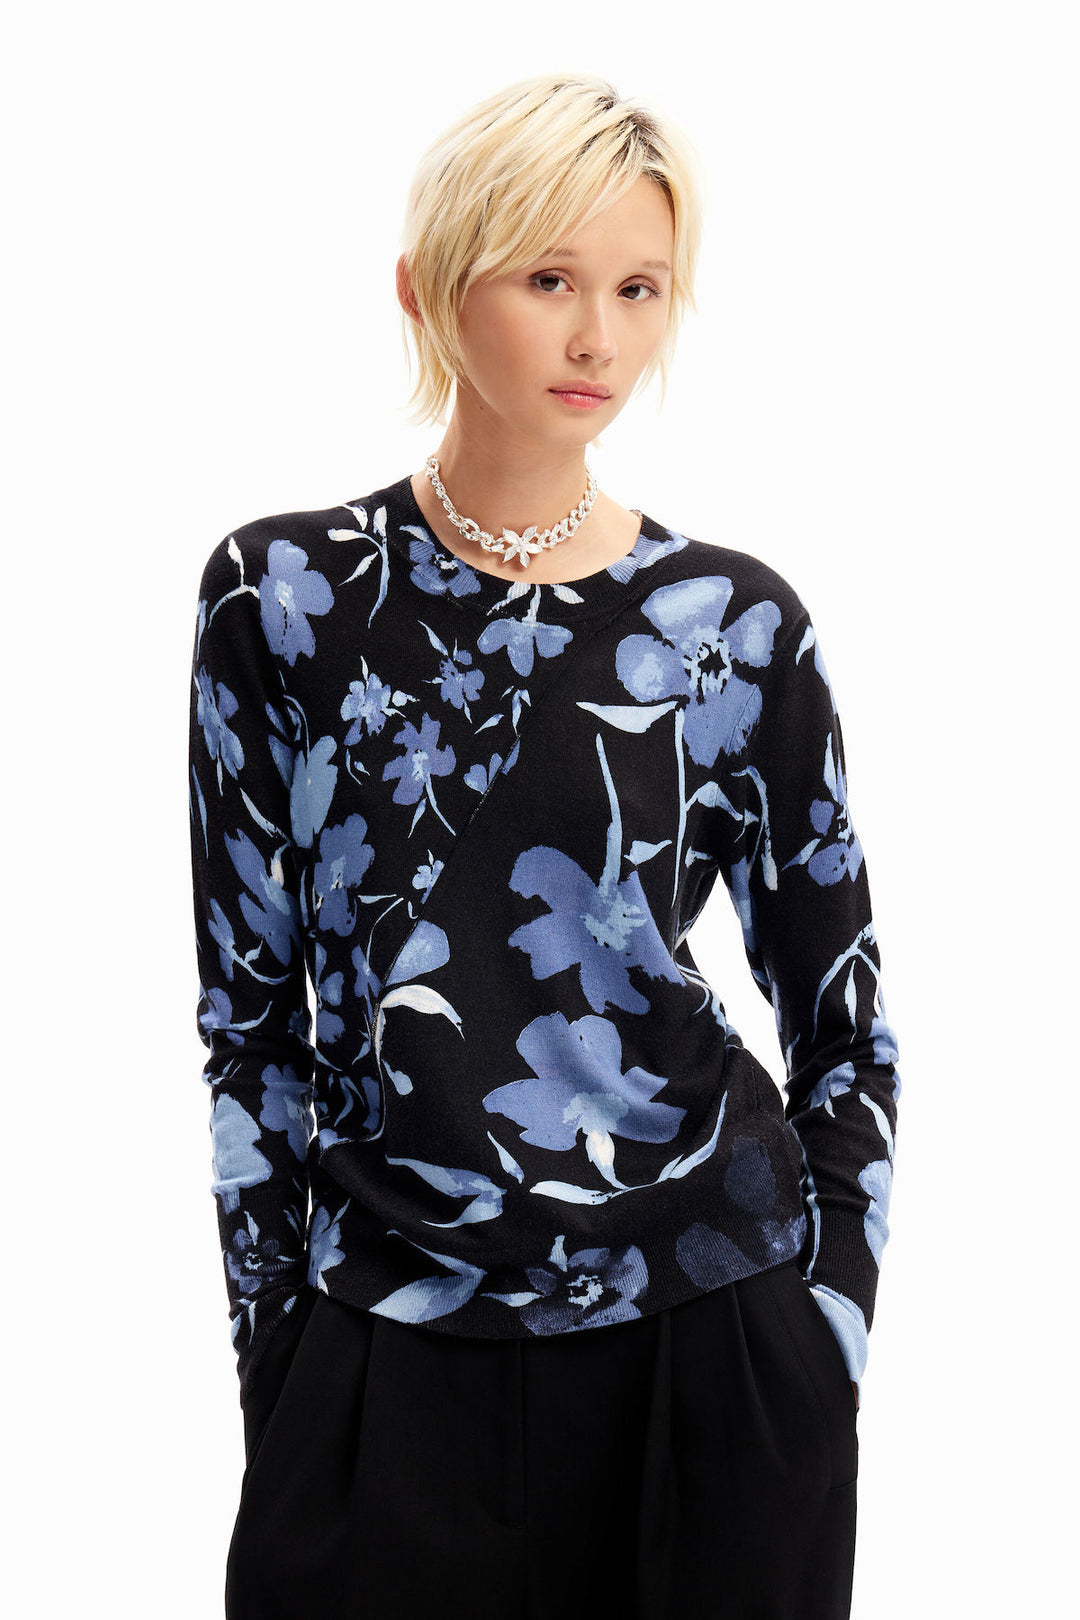 Flower print sweater